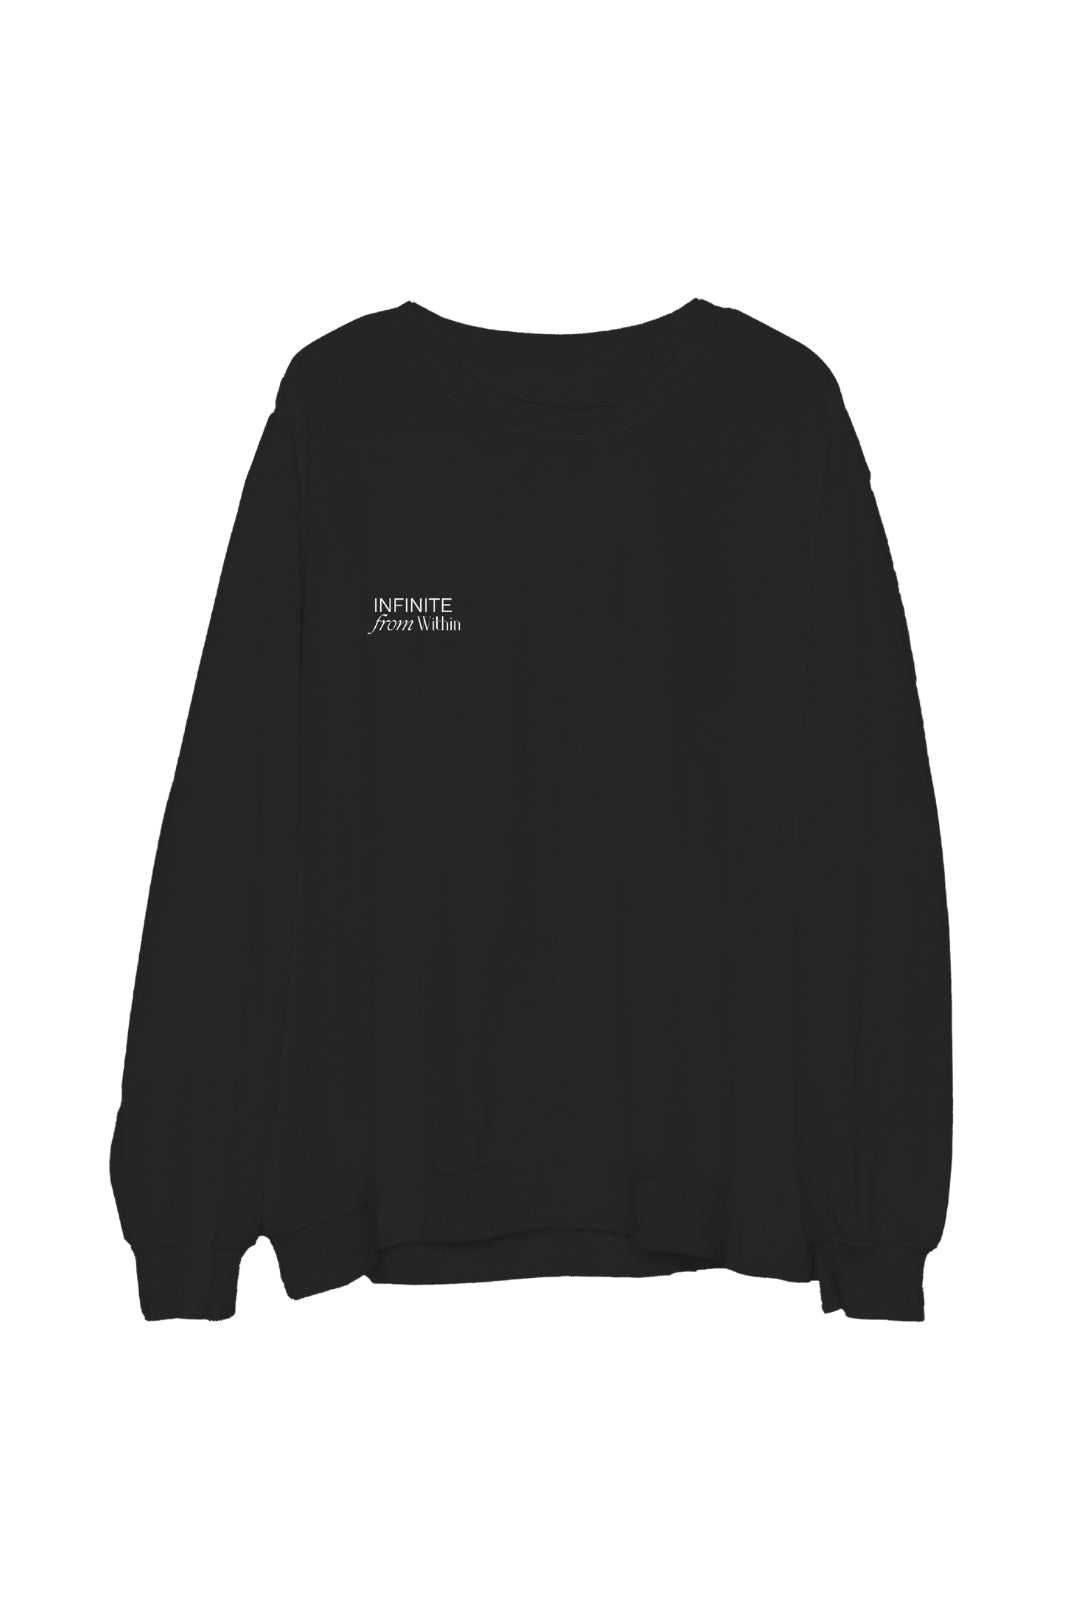 Infinite Crew Neck Sweater in Black (Unisex)